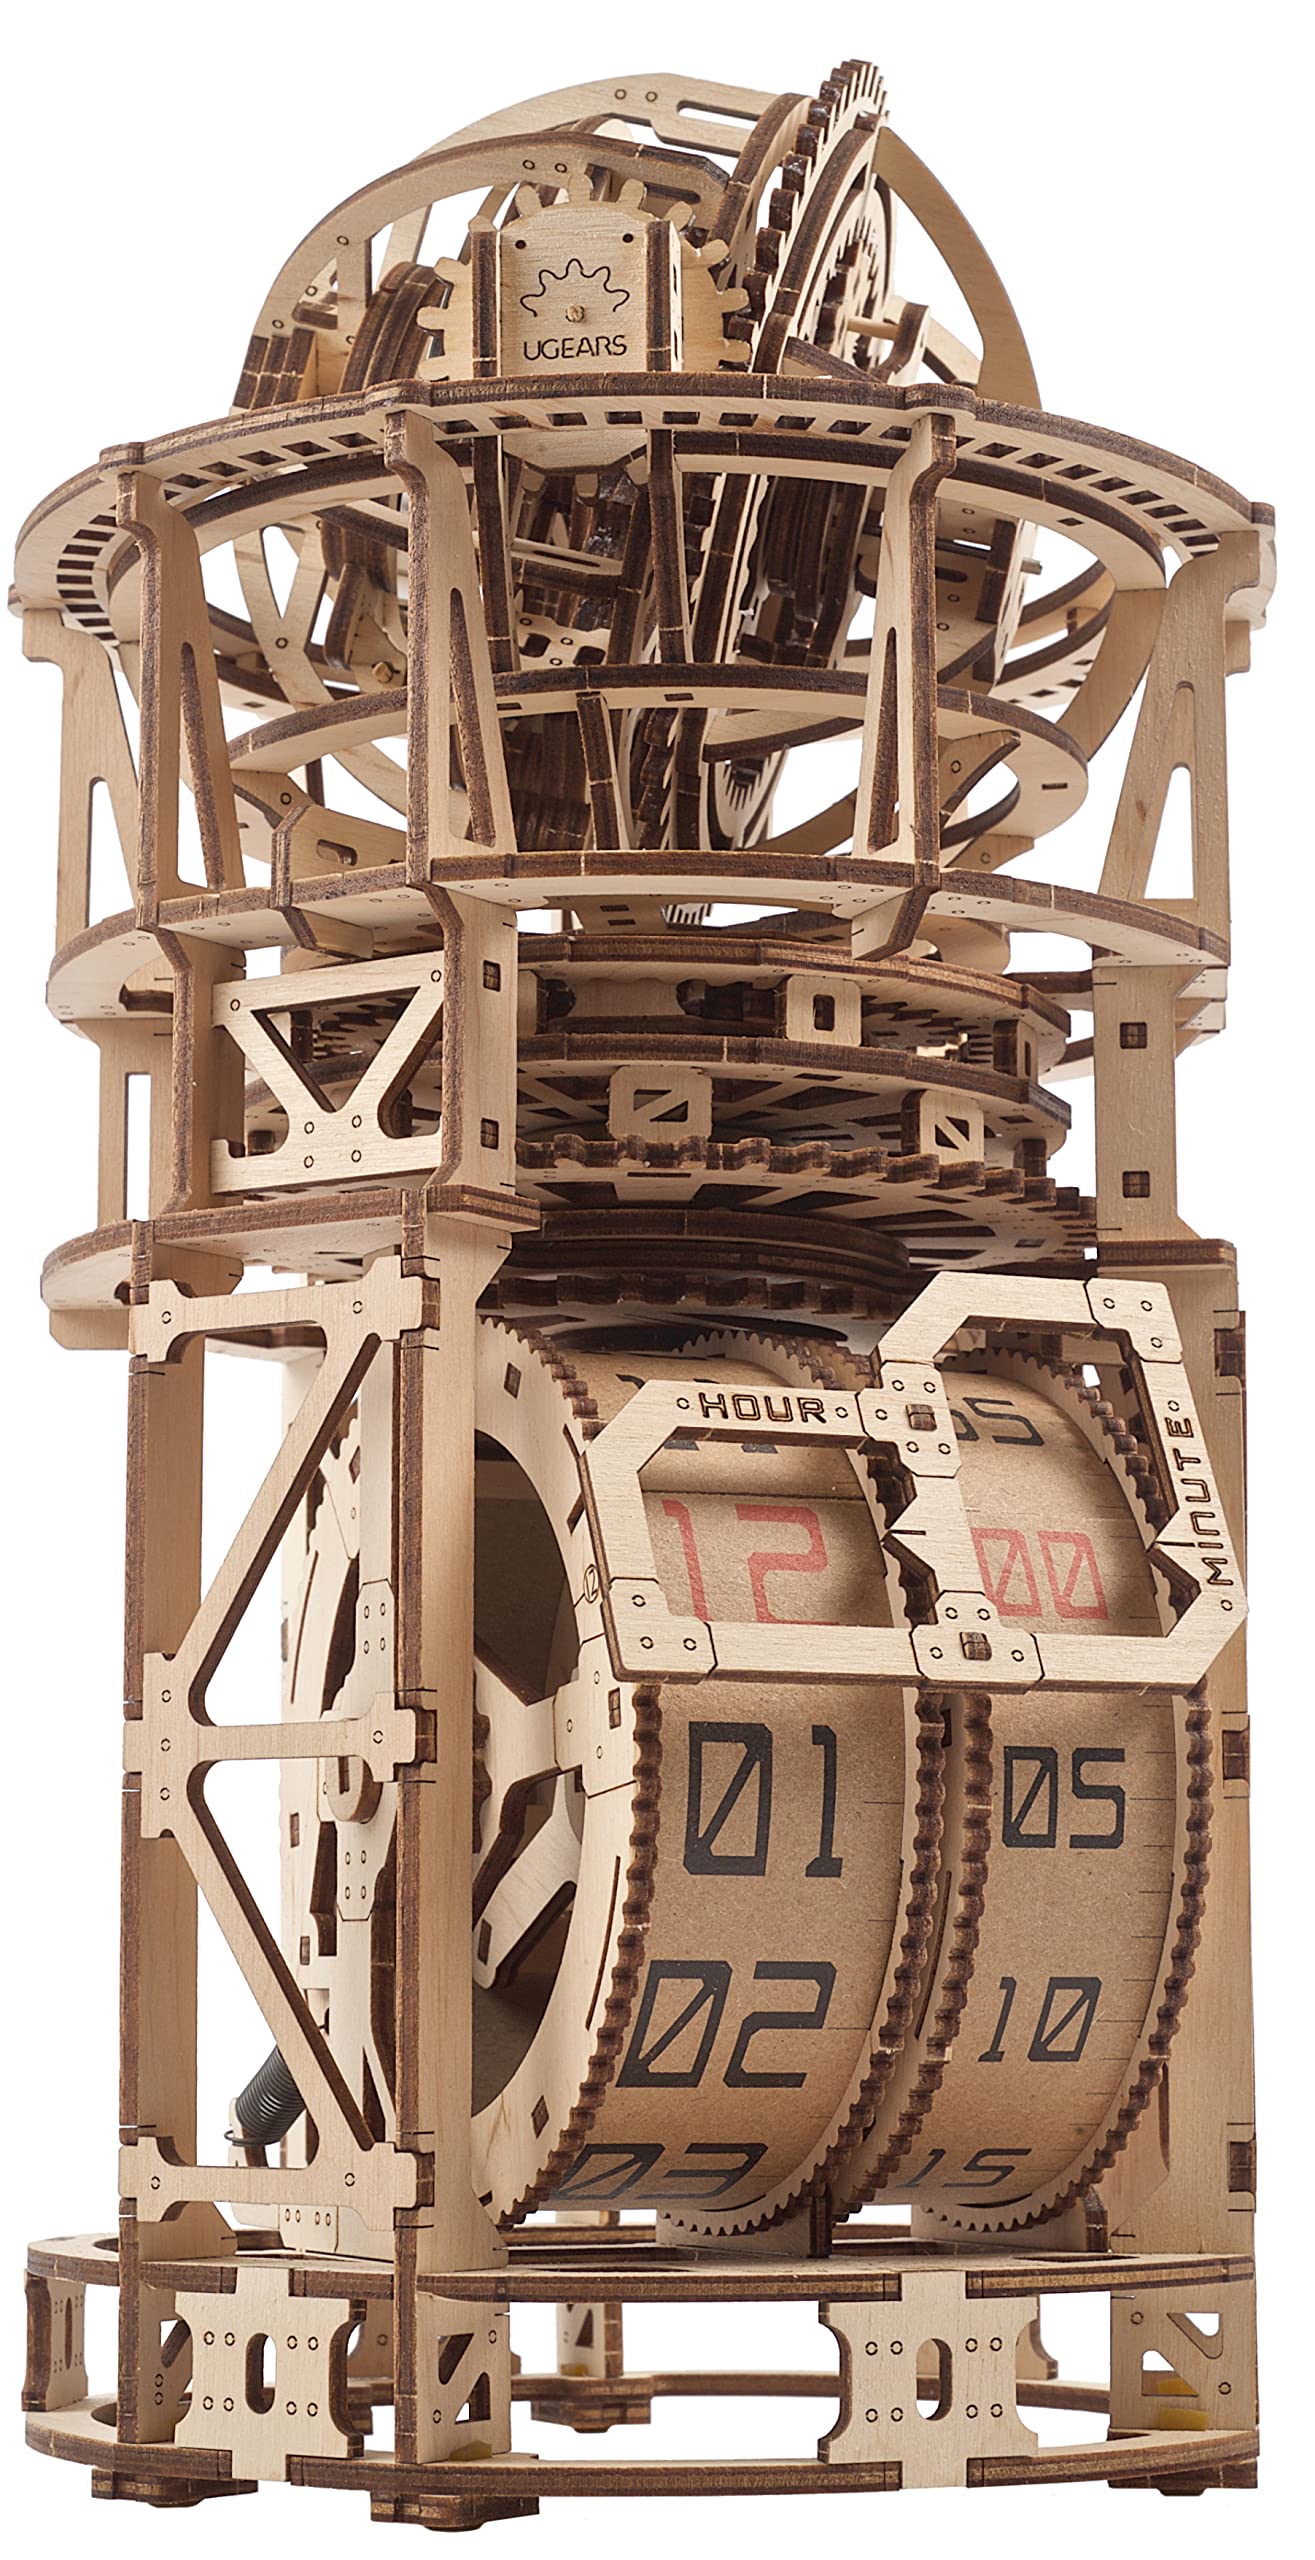 UgEARS Tourbillon Table clock Kit - Sky Watcher 3D Wooden Puzzles Mechanical clock Kit Idea DeskWood clock Kits to Build - 3D Pu